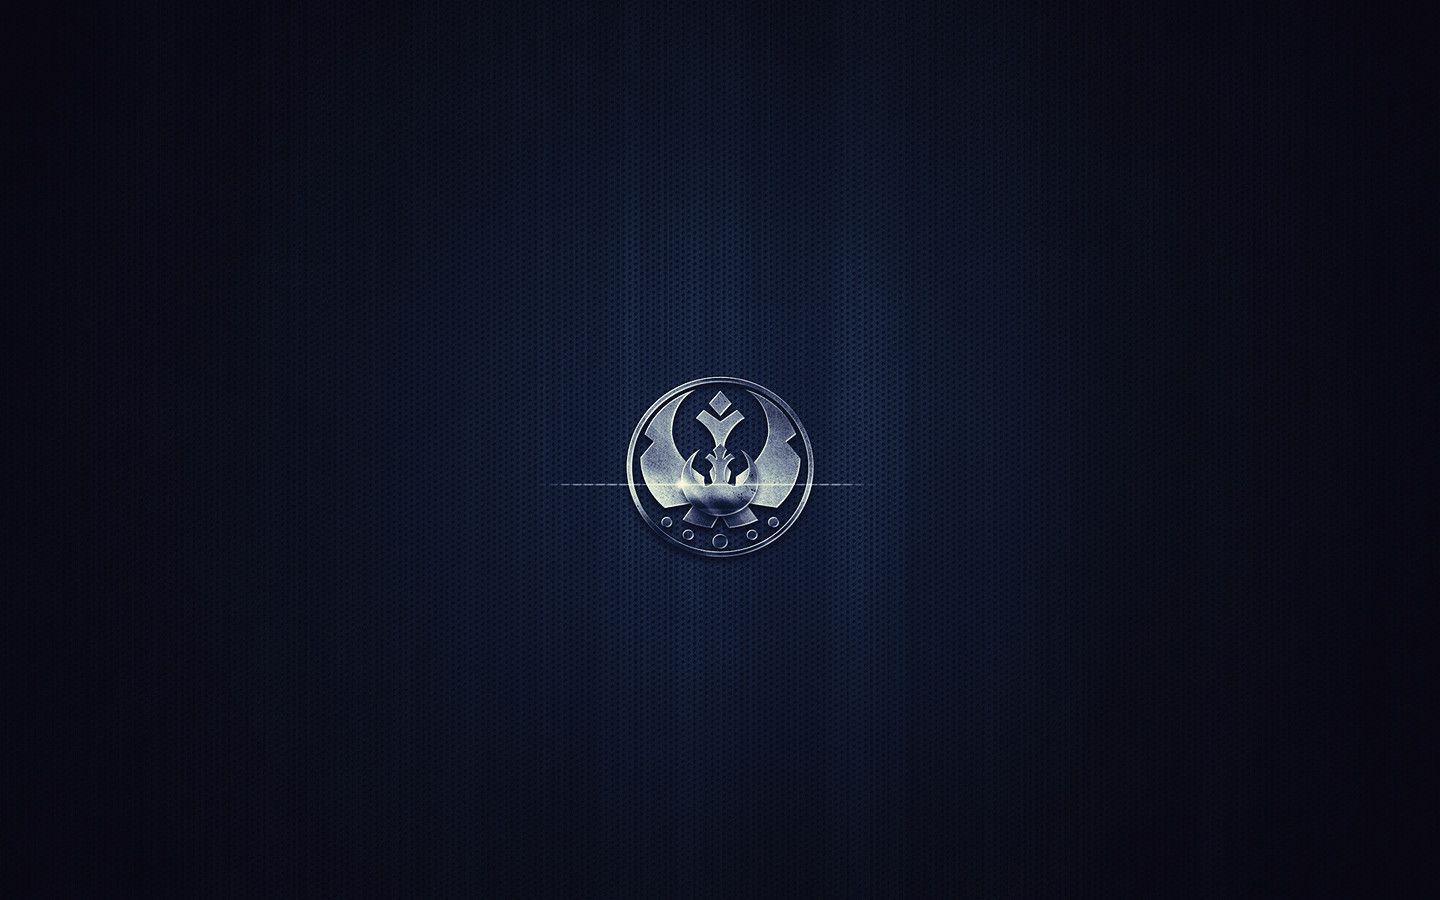 Logo Star Wars Wallpaper. Free HD Desktop Wallpaper. Viewhdwall